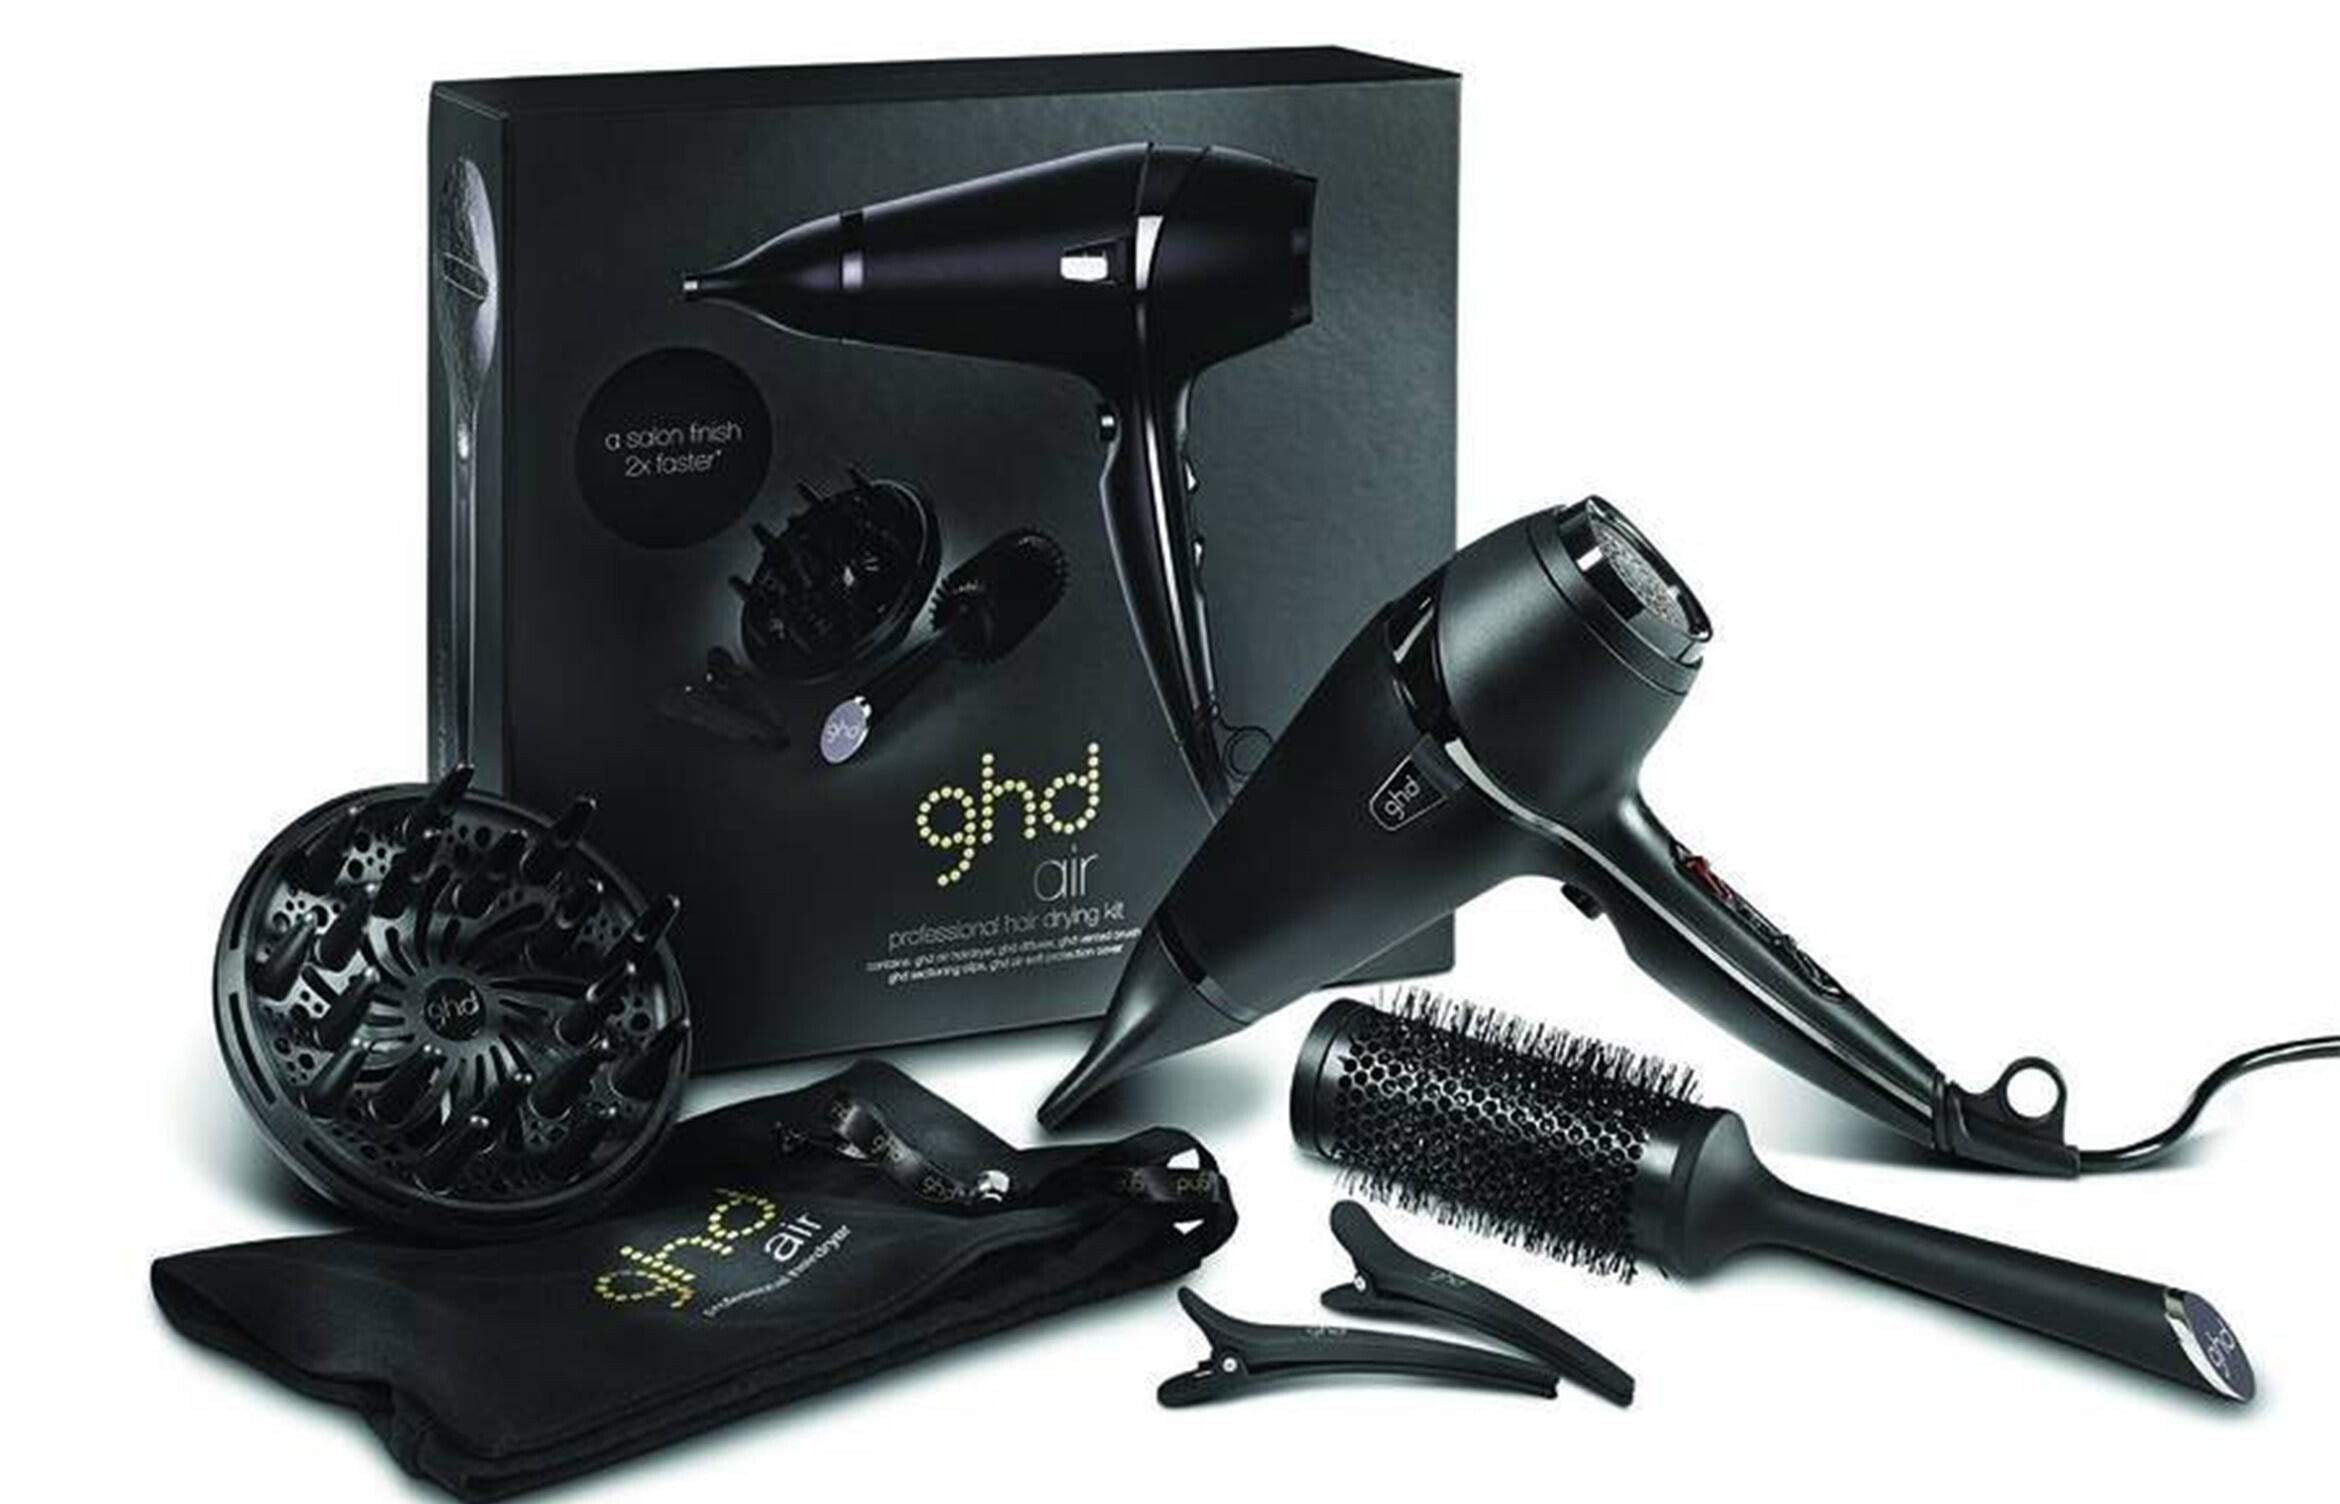 Ghd фен. Фен ghd Air Hairdryer. Фен ghd Air hair Drying Kit. Ghd Air Hairdryer 2100 w. Ghd фен Air 1800-2100 w черный.